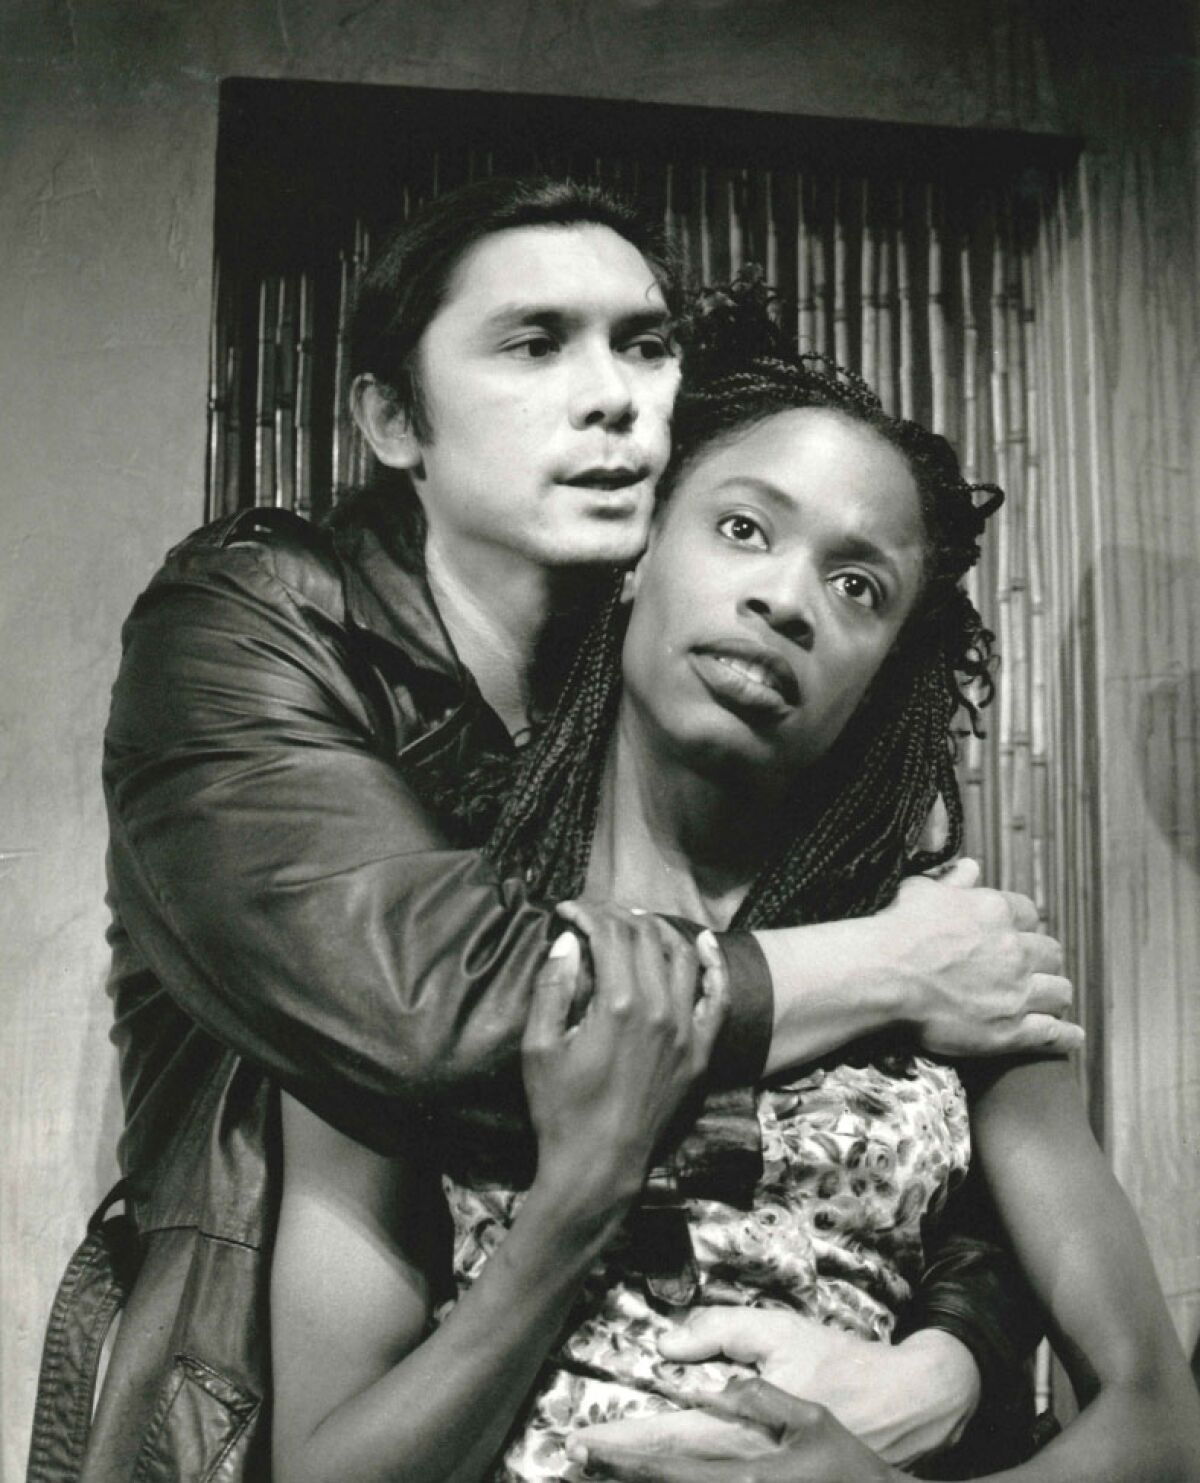 Charlayne Woodard, right, with Lou Diamond Phillips in La Jolla Playhouse's "The Good Person of Setzuan" in 1994.